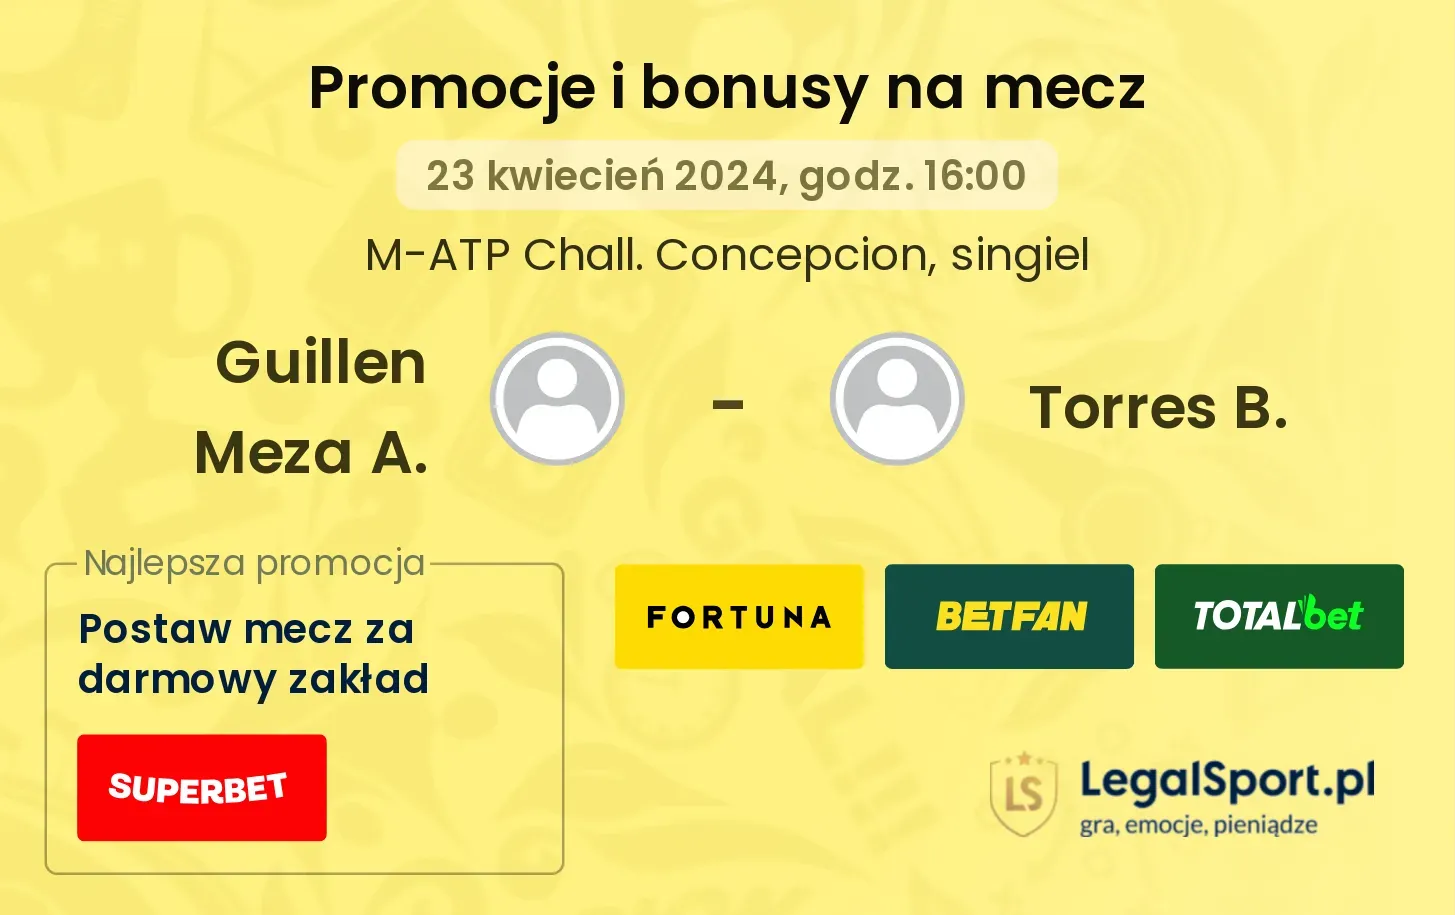 Guillen Meza A. - Torres B. promocje bonusy na mecz